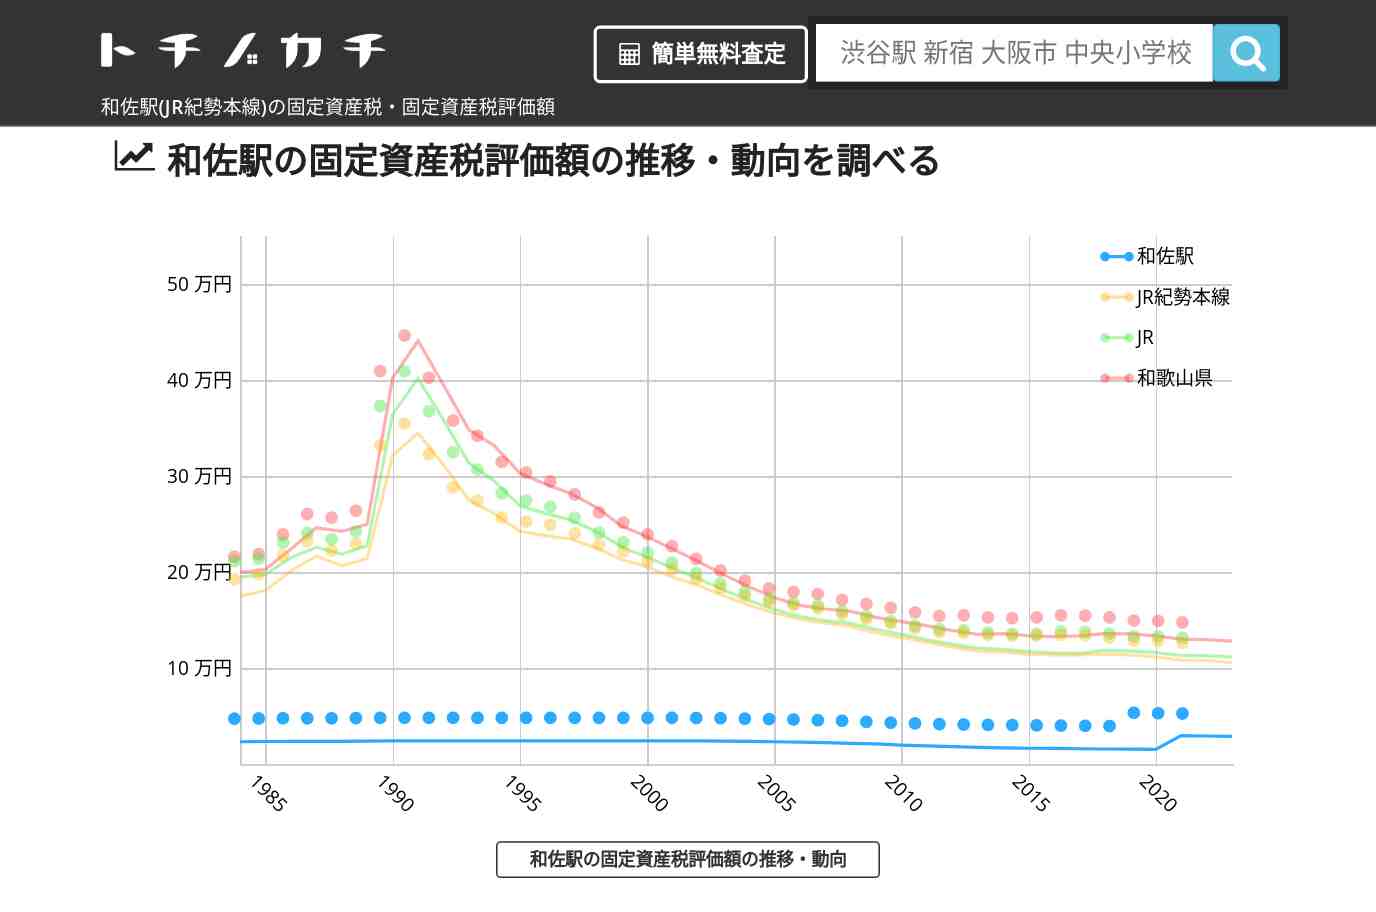 和佐駅(JR紀勢本線)の固定資産税・固定資産税評価額 | トチノカチ